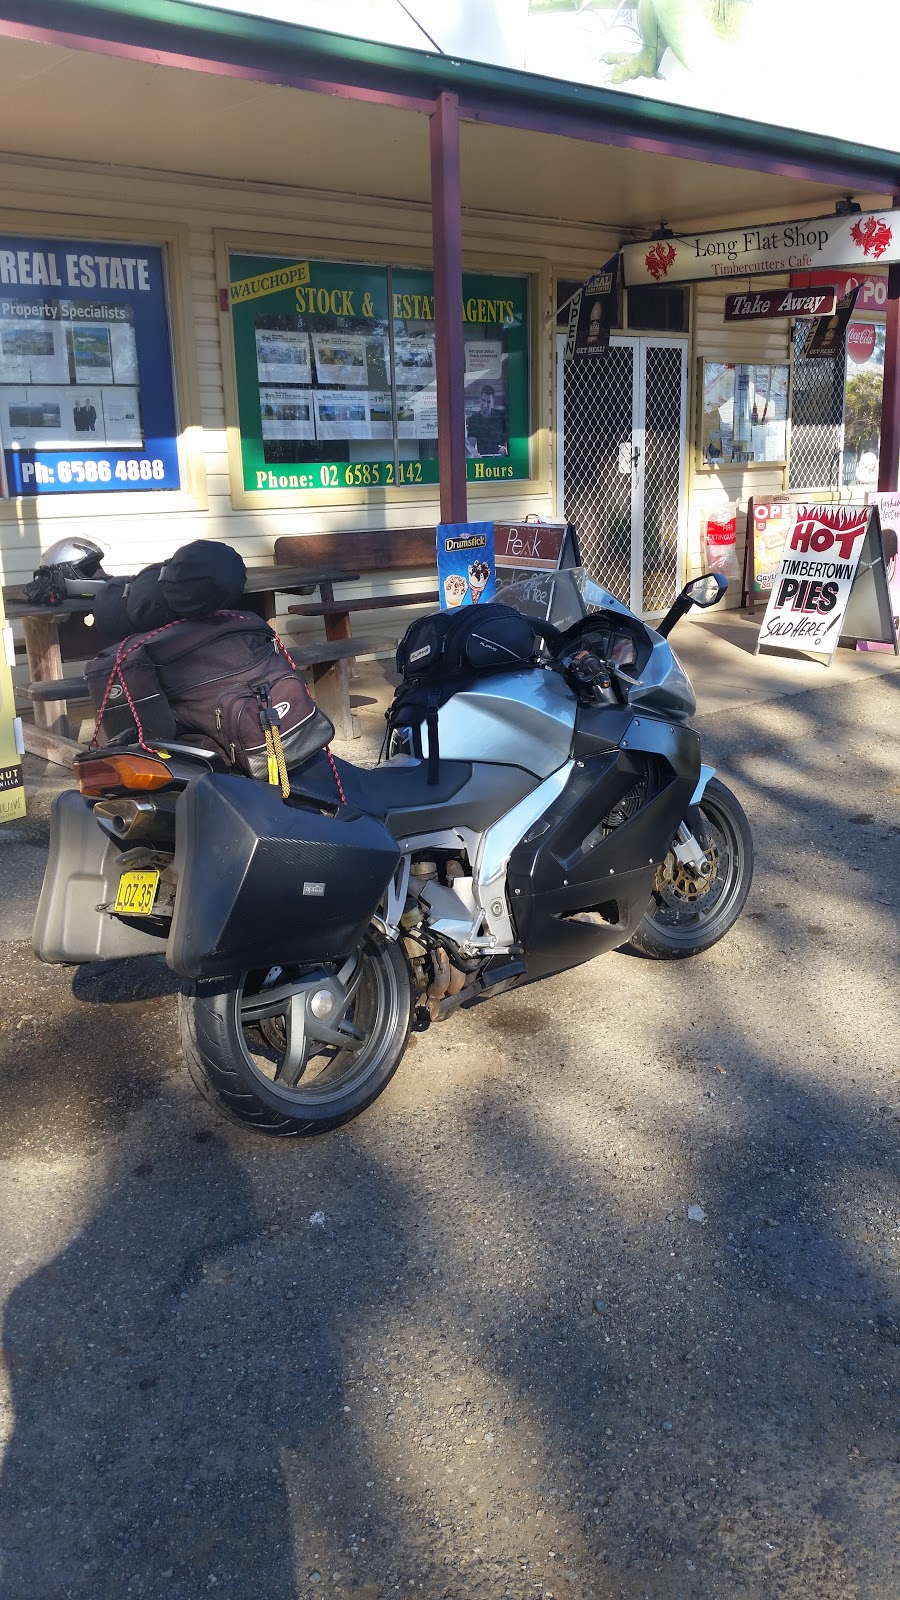 Long Flat Shop | gas station | 5019 Oxley Hwy, Long Flat NSW 2446, Australia